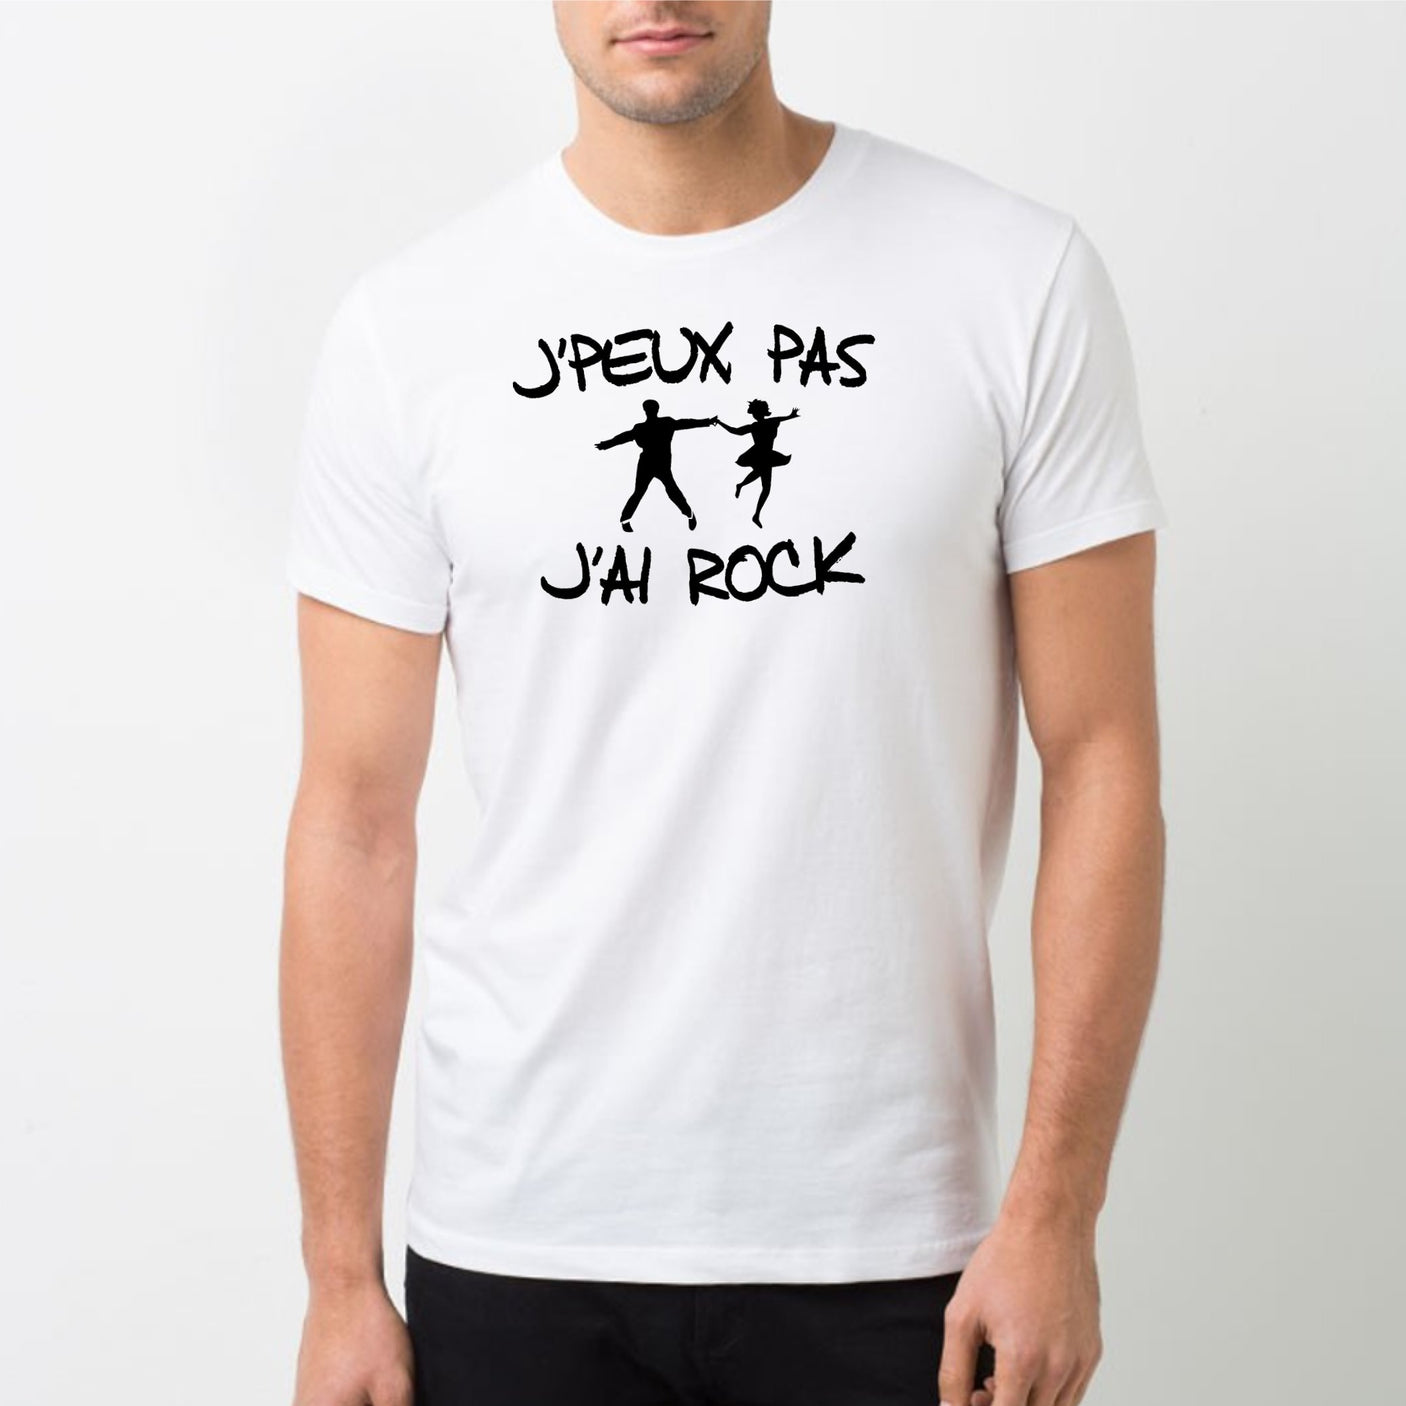 tee shirt humour homme - cadeau' T-shirt Homme